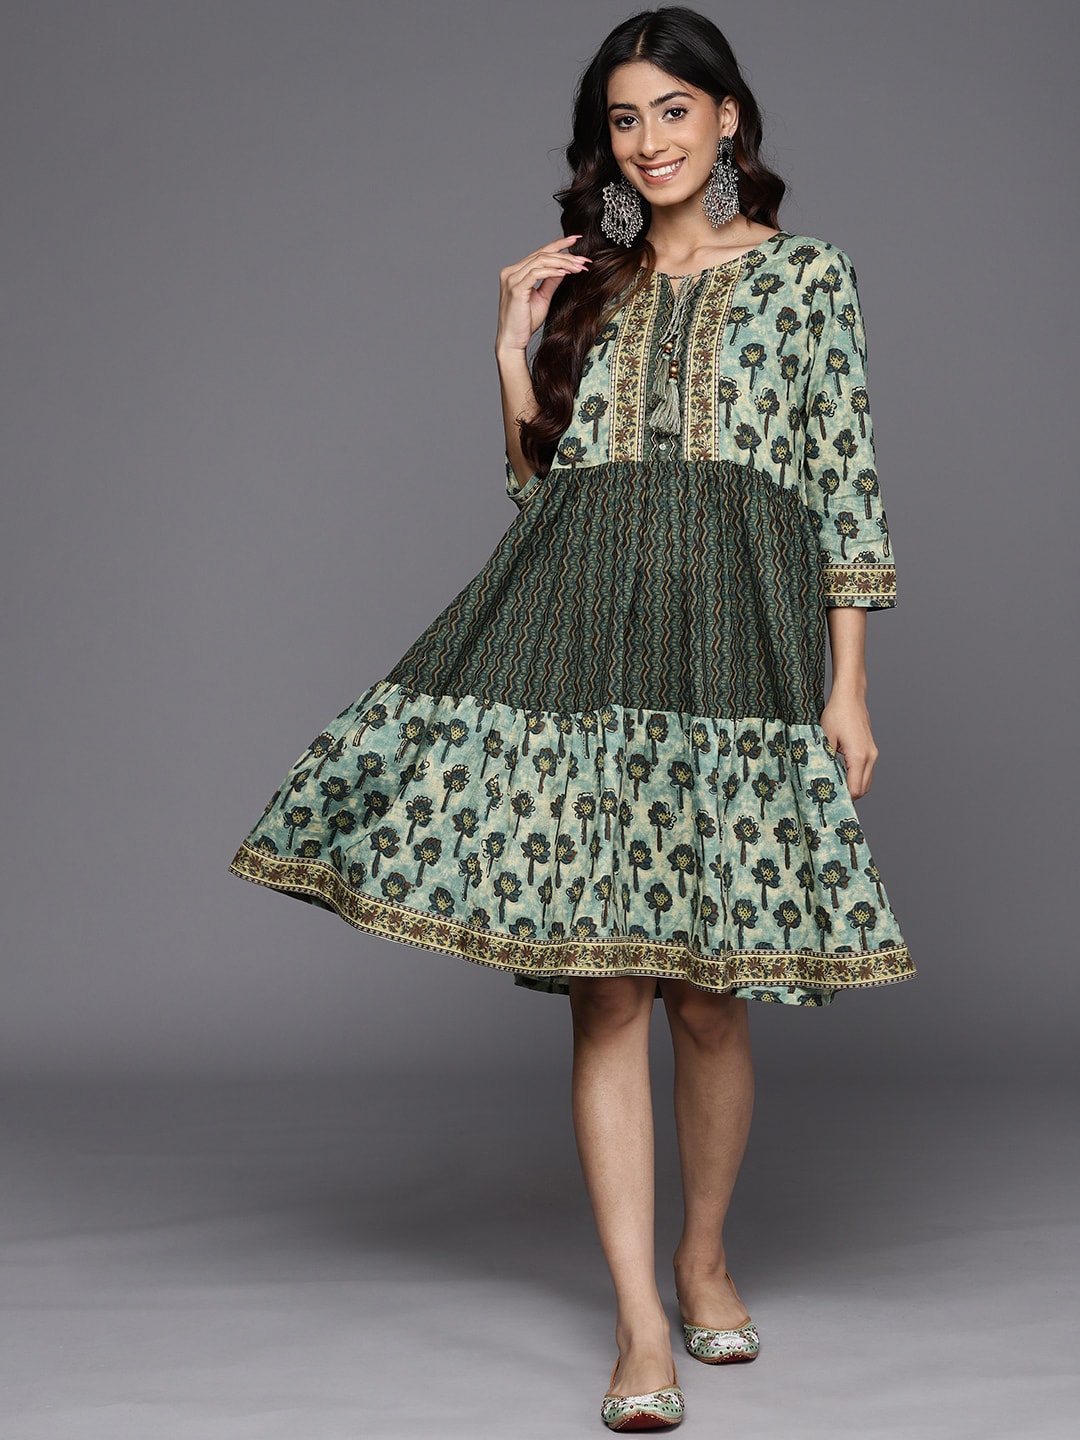 Varanga Floral Print Cotton A-Line Dress Price in India